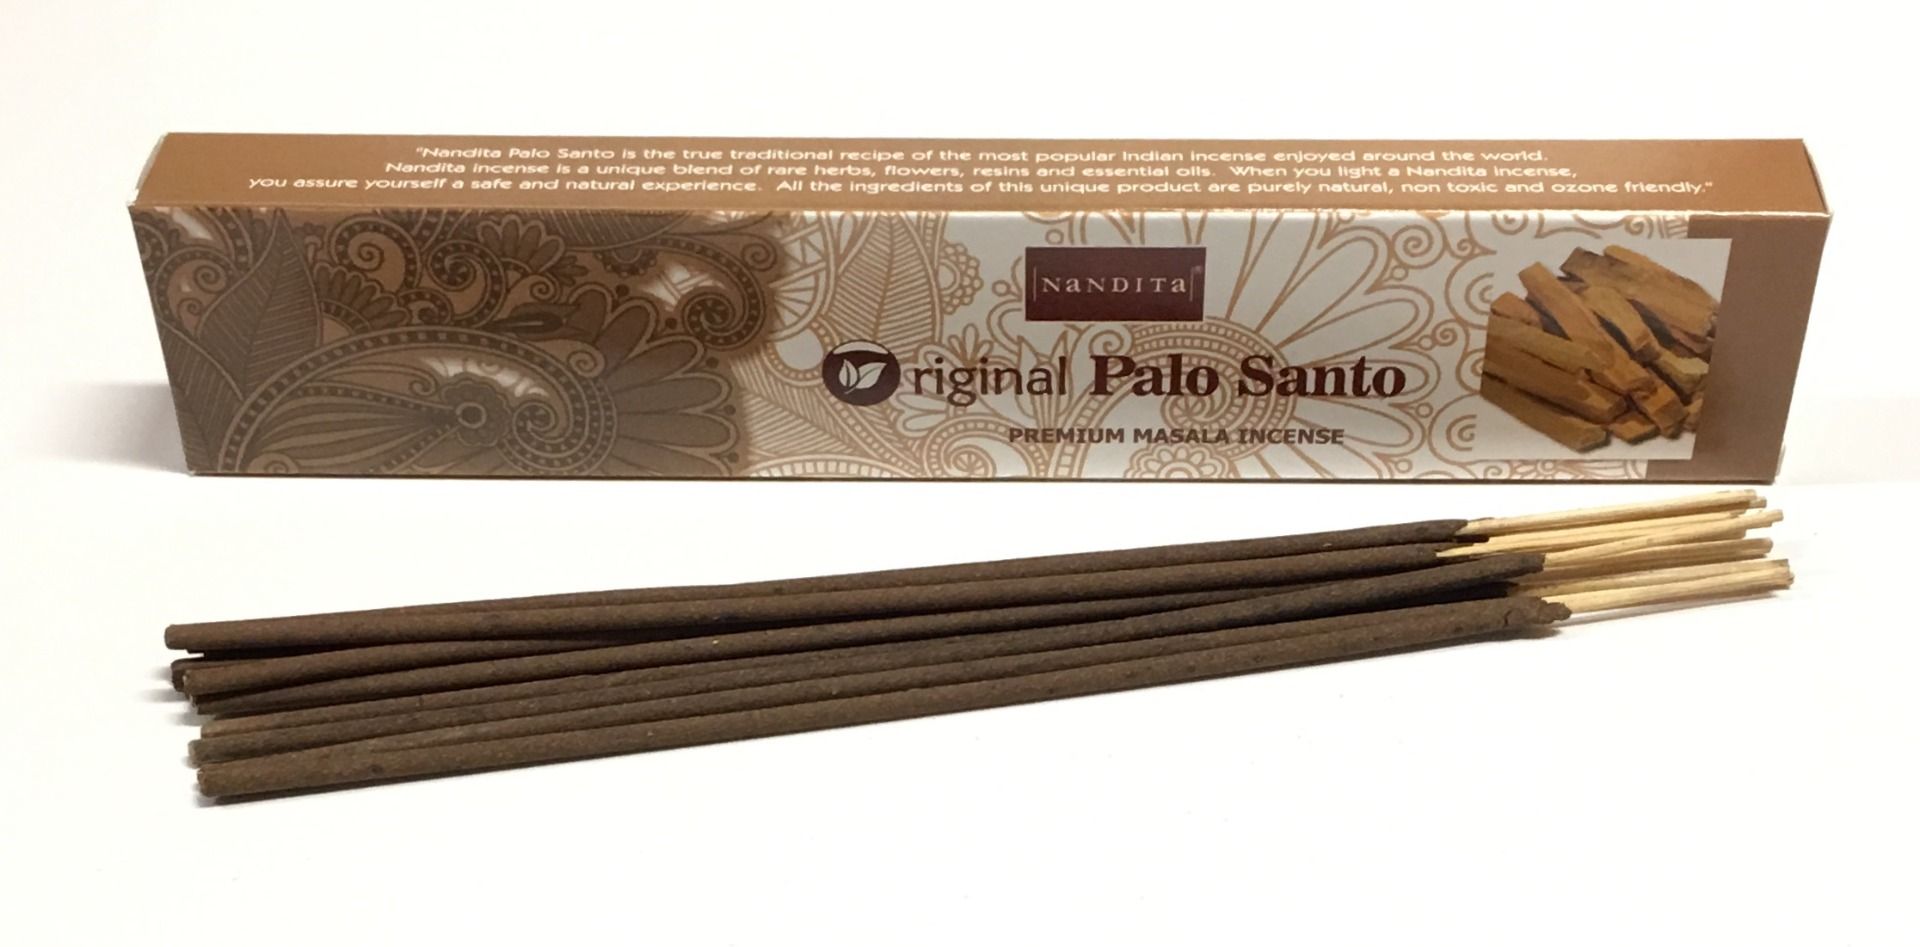 Nandita Palo Santo Incense Sticks